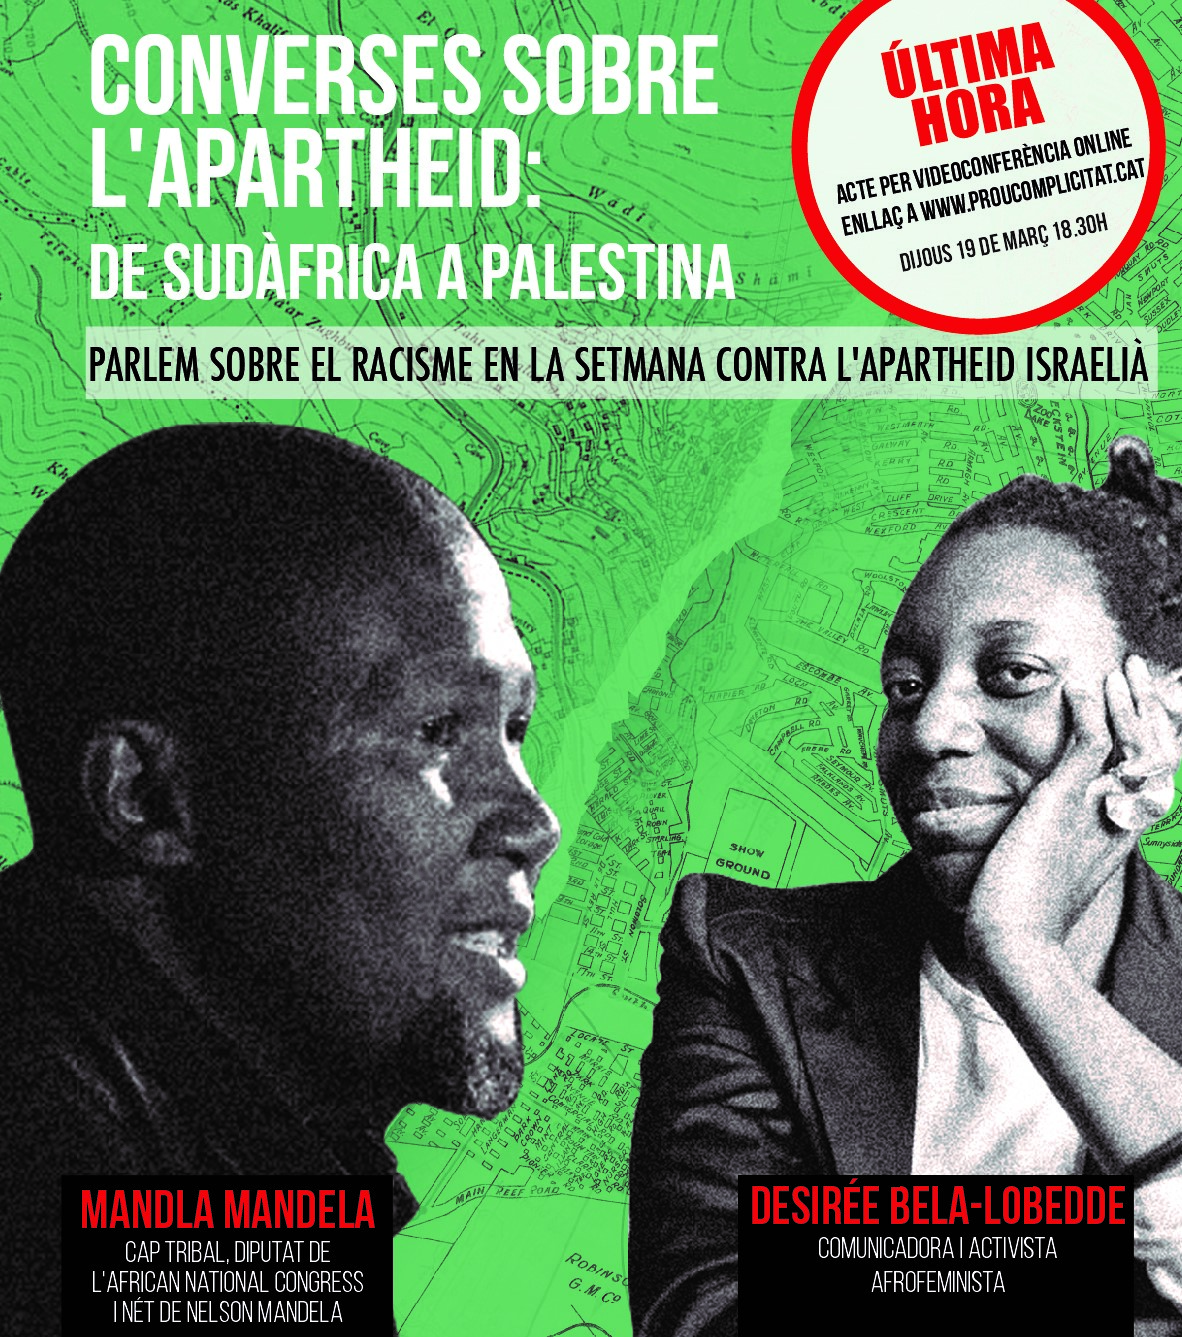 Mandla Mandela visits Barcelona during Anti-Apartheid Week